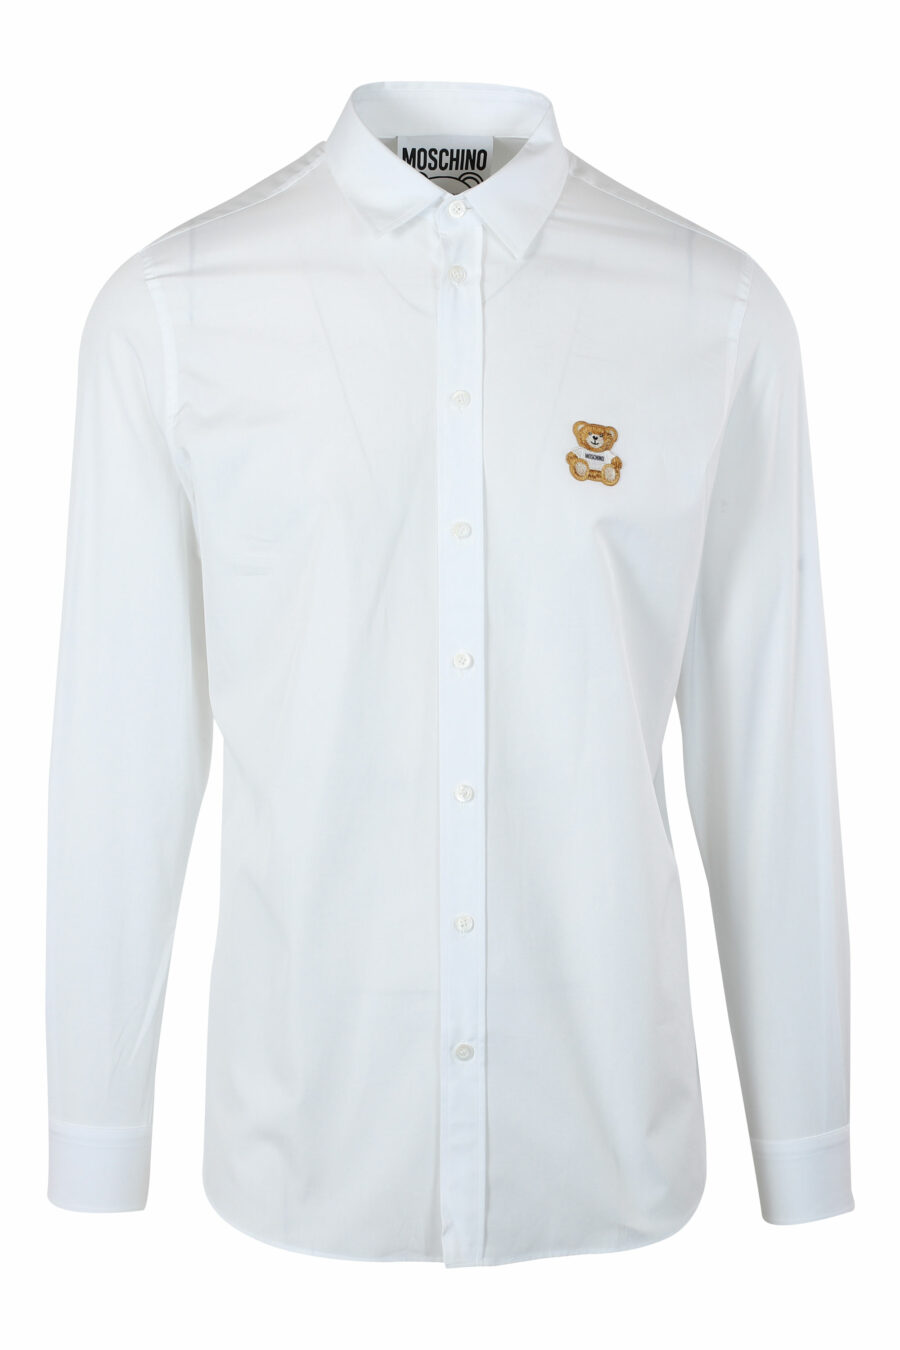 Camisa blanca con logo teddy bordado - IMG 9621